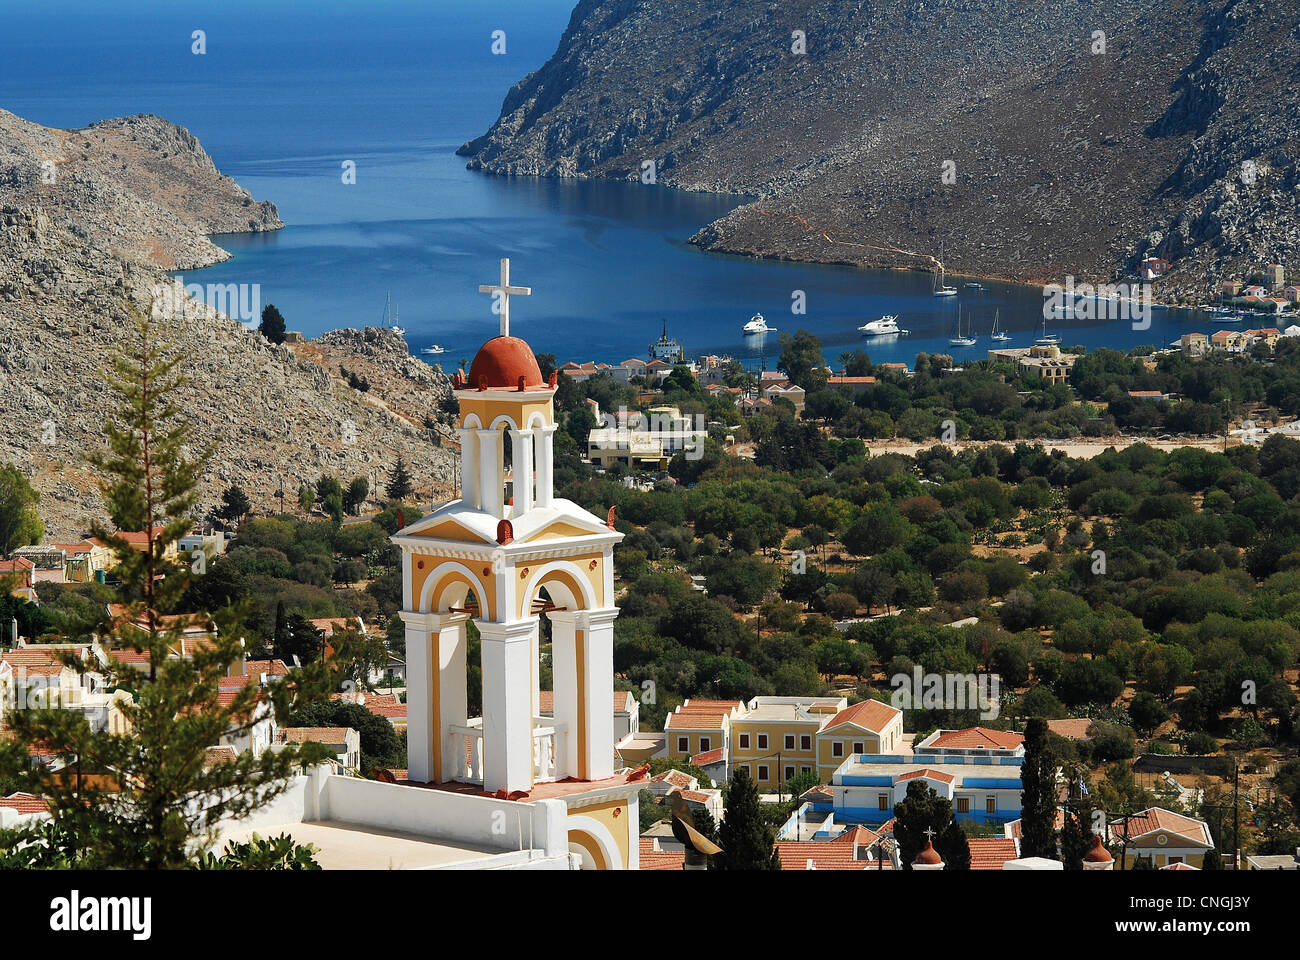 Europa Griechenland Dodekanes Symi Insel Glockenturm Stockfoto